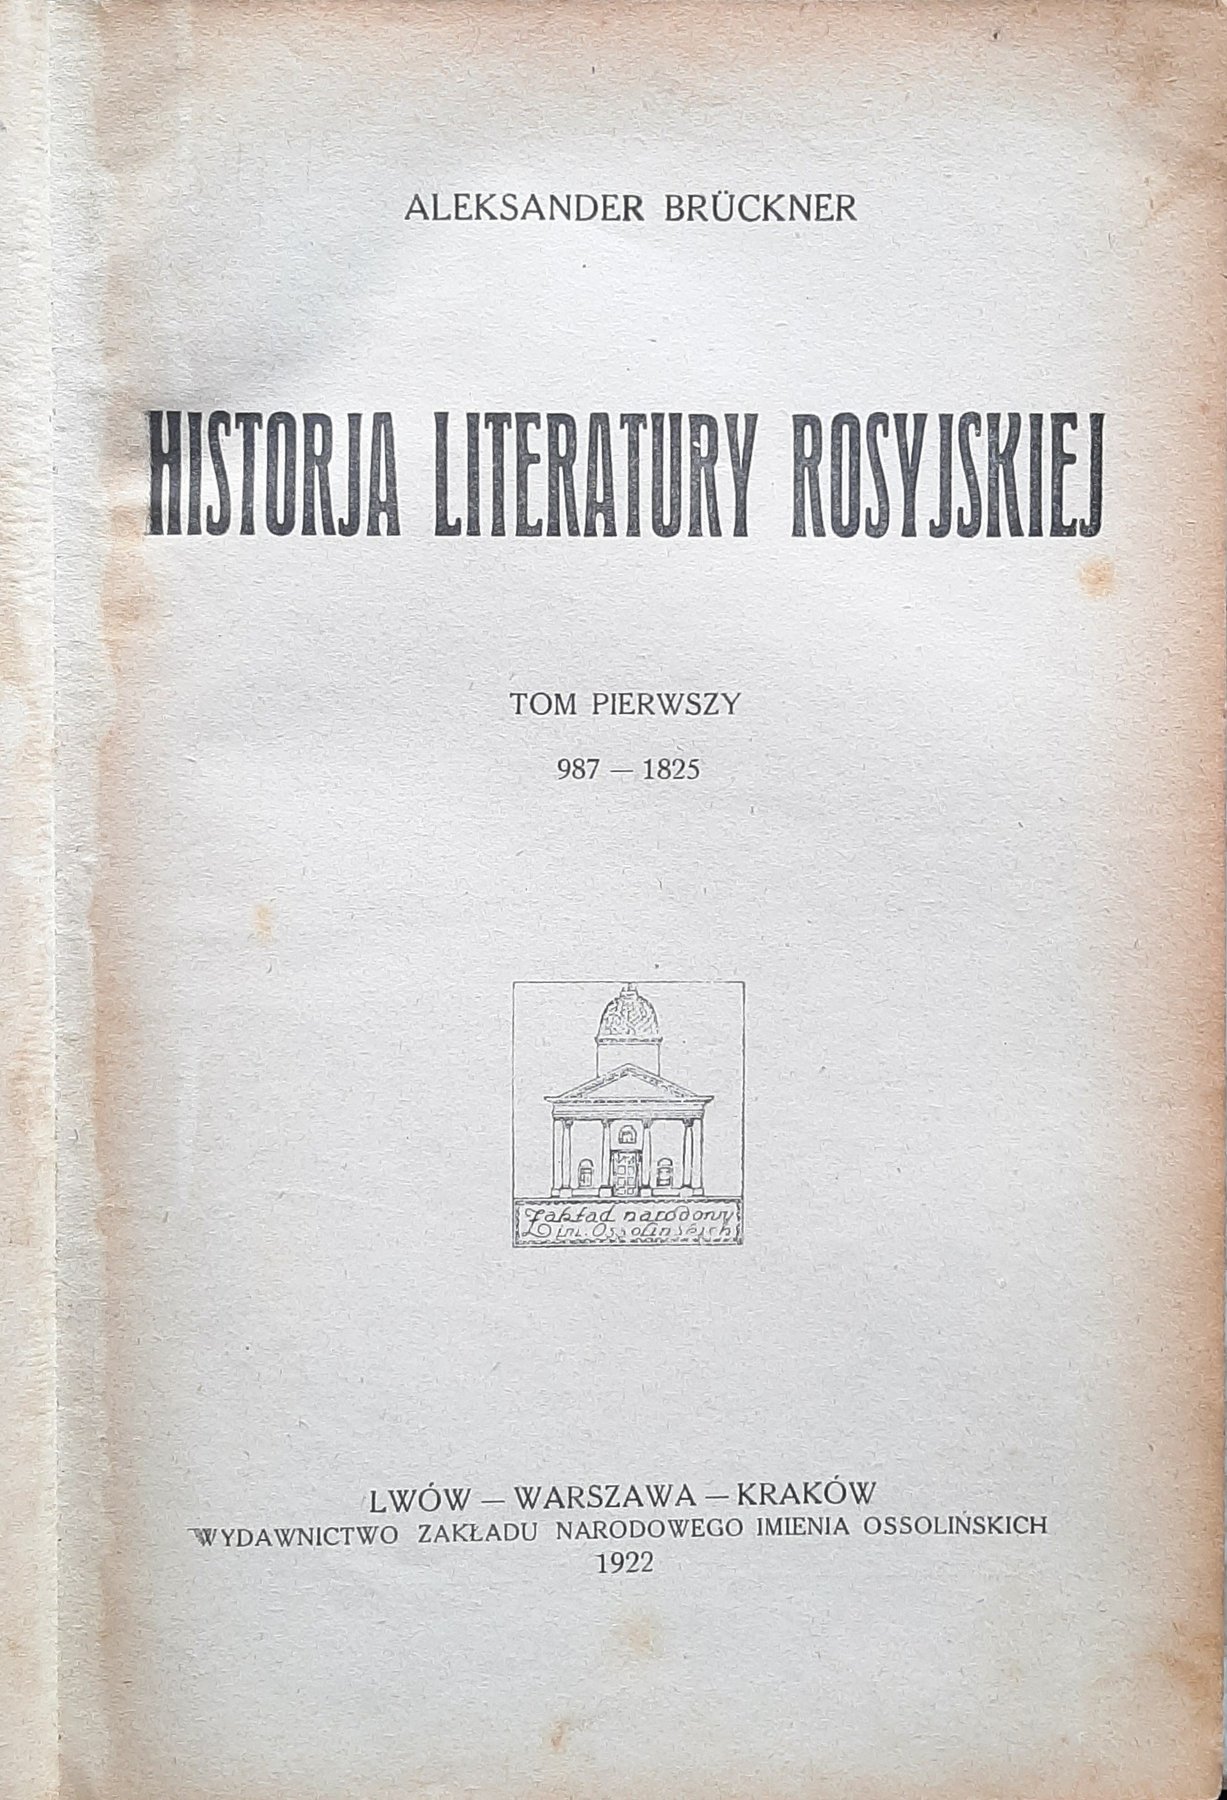 ALEKSANDER BRUCKNER - HISTORJA LITERATURY ROSYJSKIEJ - TOM PIERWSZY 987-1825 …